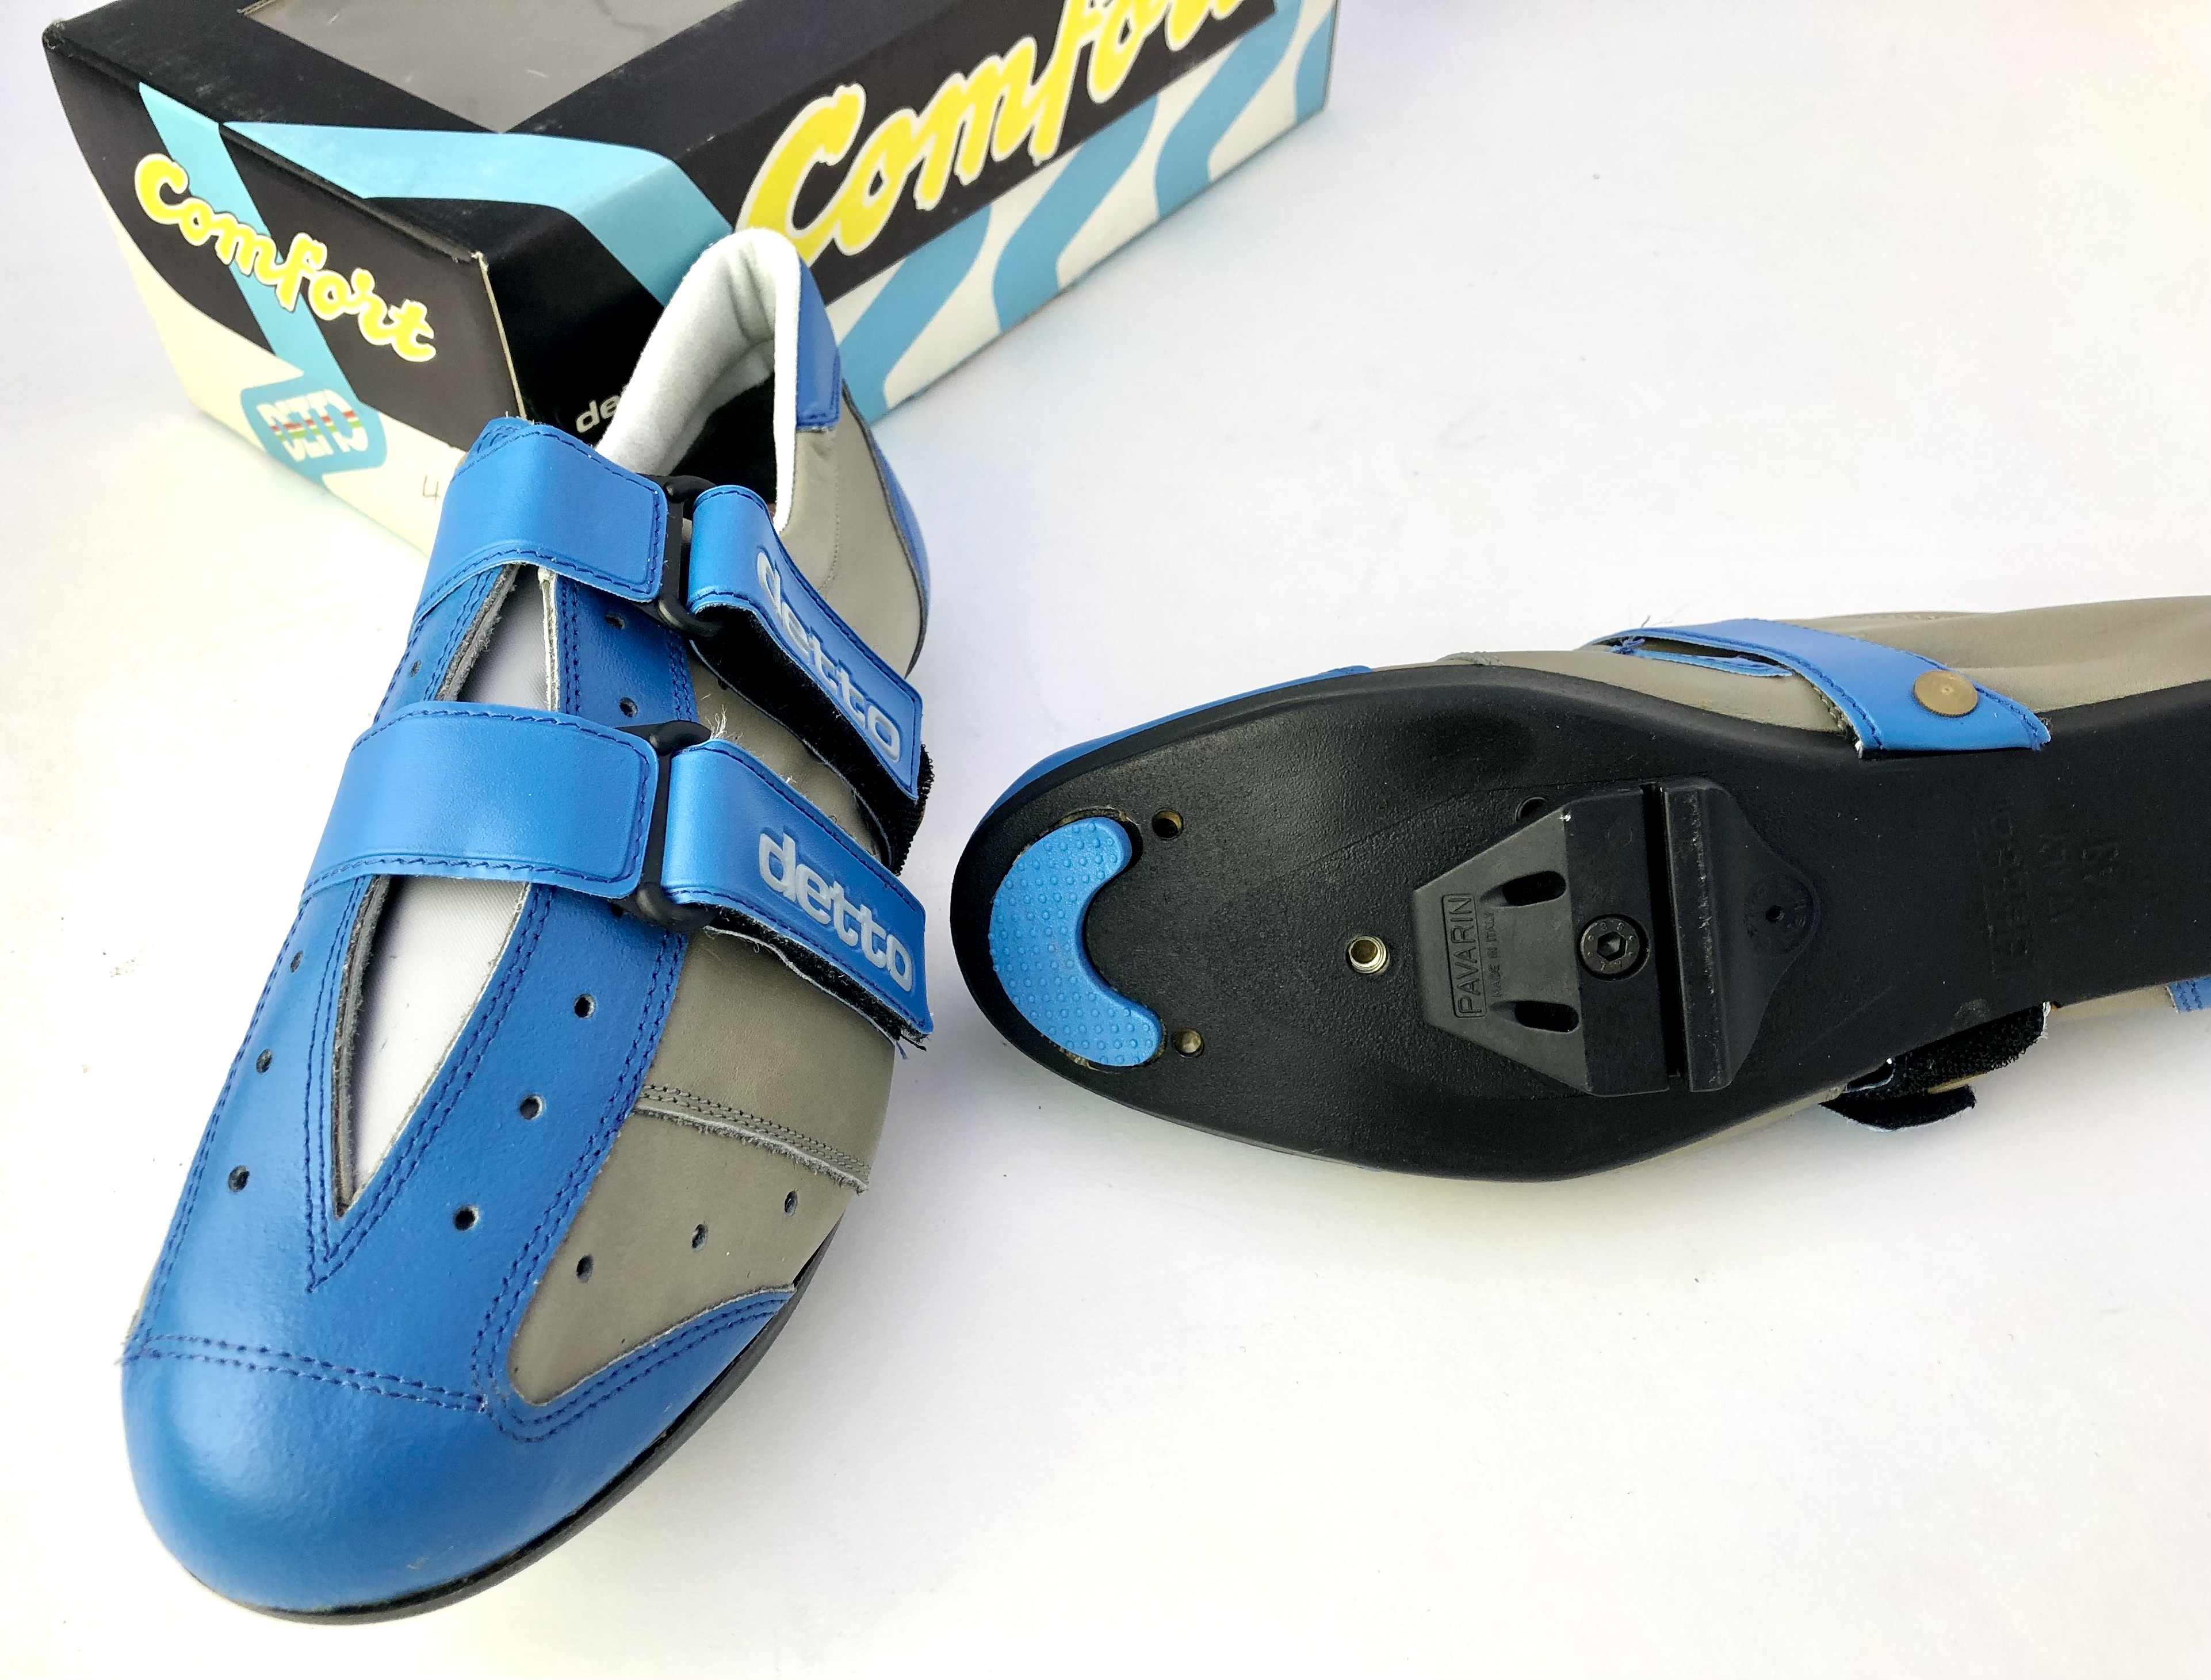 NOS Vintage Detto Pietro Mod. 230 Comfort azul Cycling Shoes Size 38